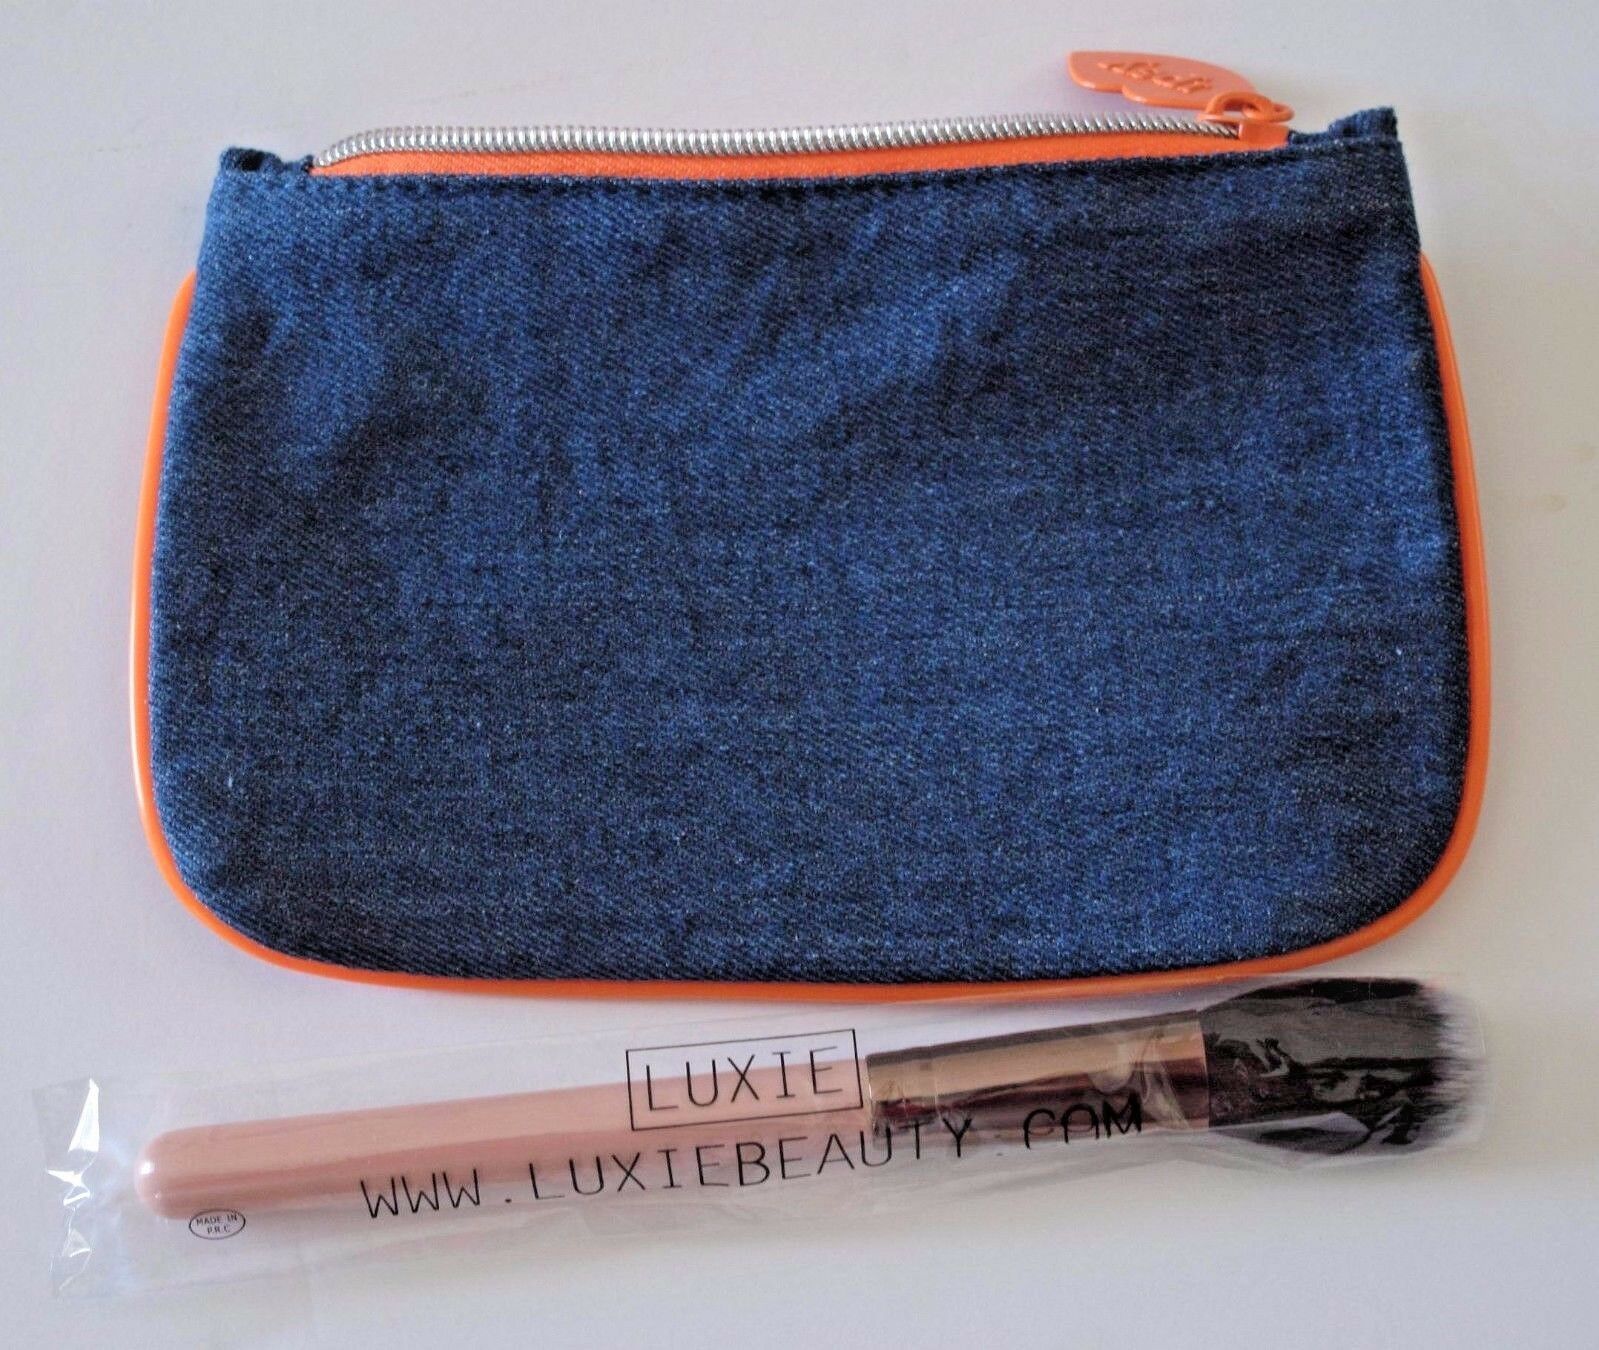 IPSY Makeup Bag Denim & Orange Borders w/ Luxie Blush Brush "Much Love" Feb 2017 - $12.67